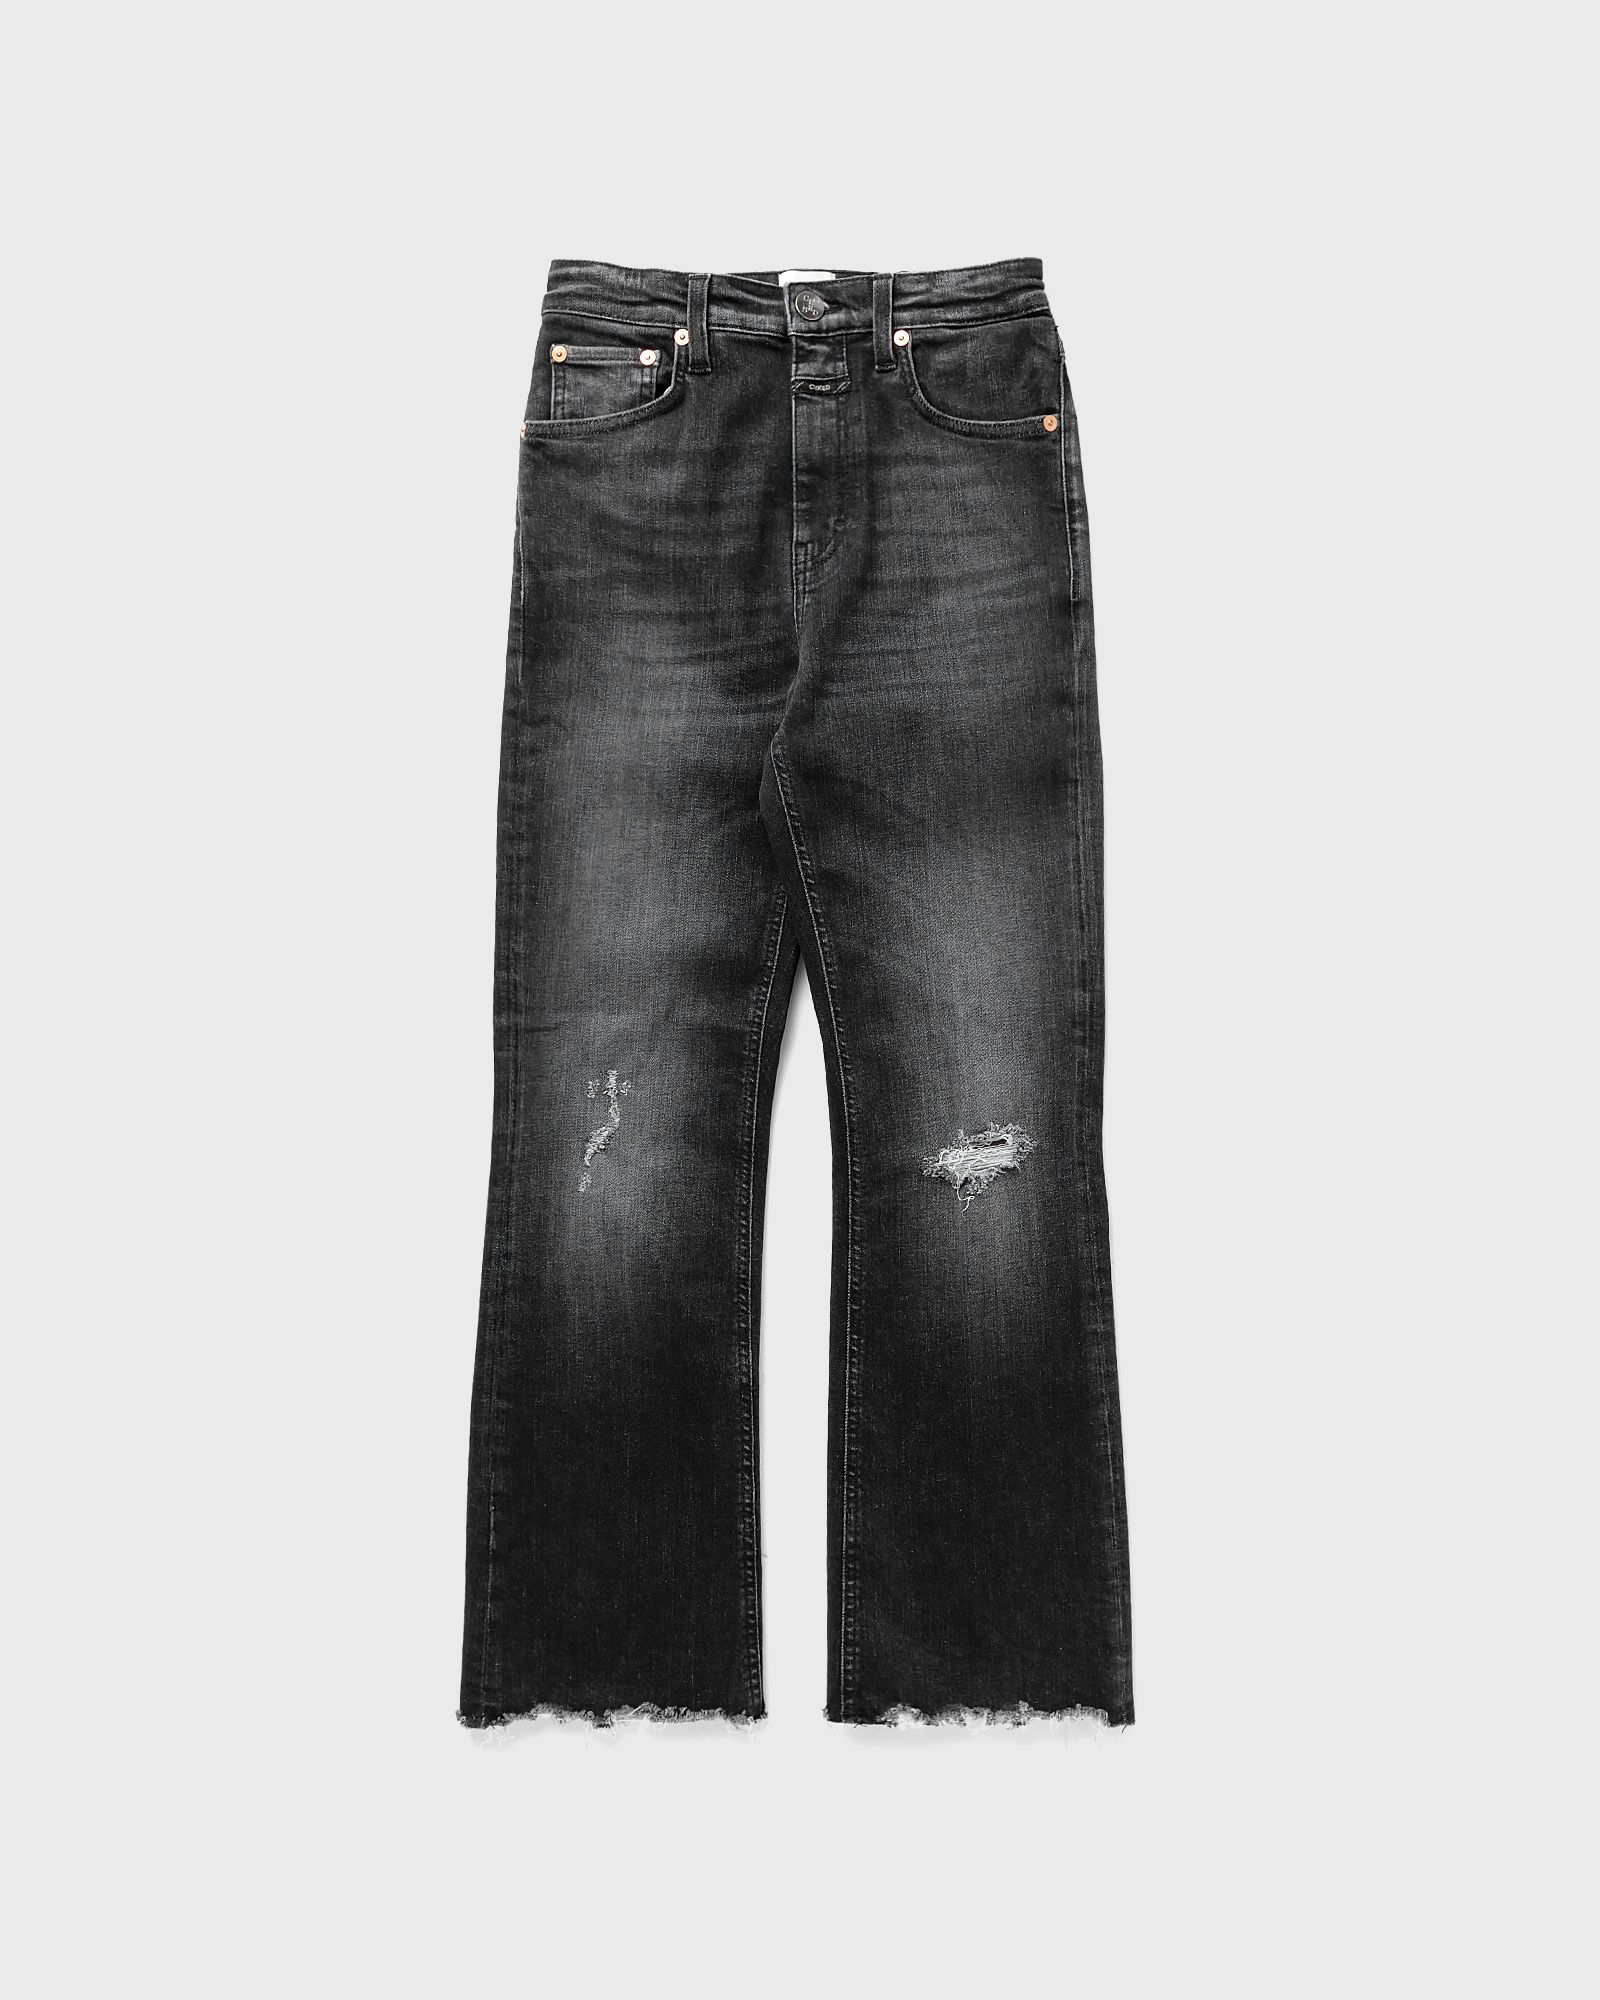 CLOSED - hi-sun women jeans grey in größe:m